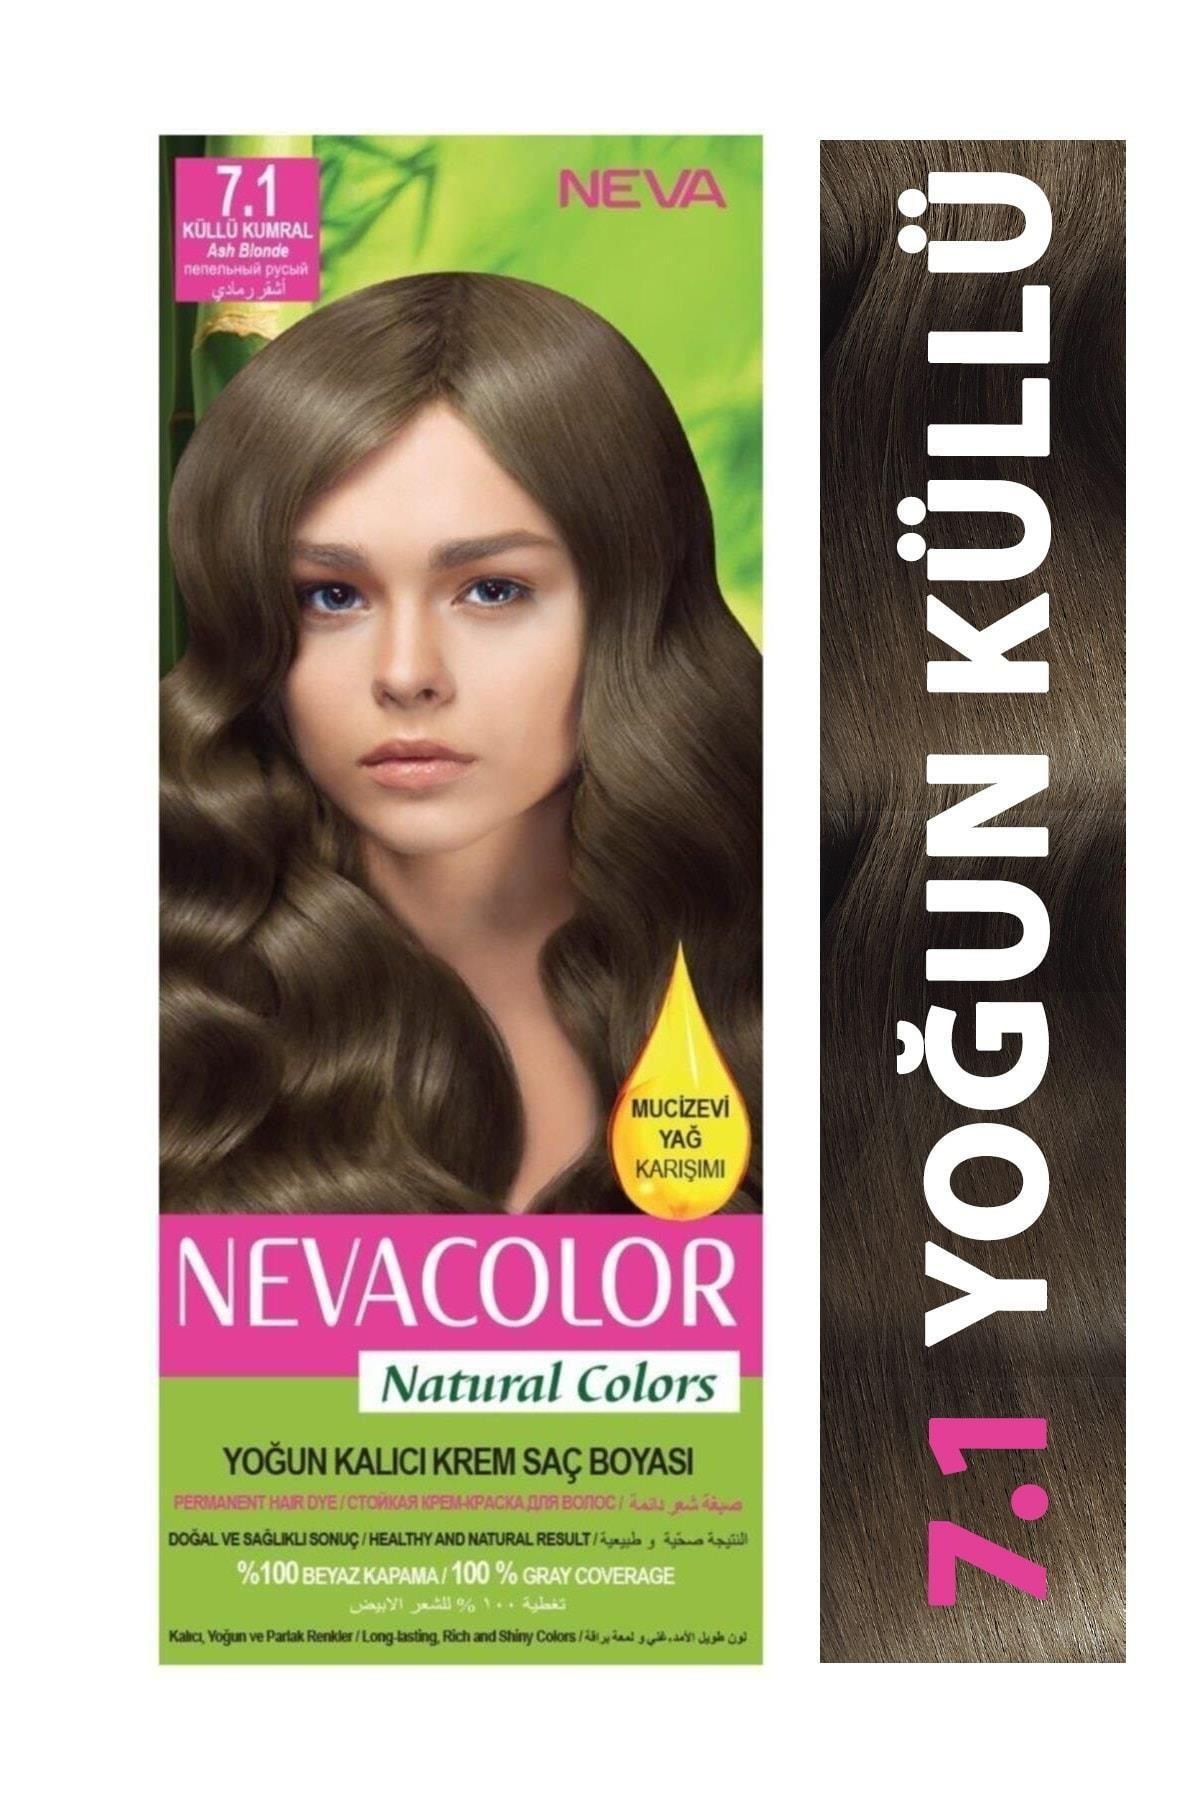 Neva Color Nevacolor Natural Colors 7.1 Küllü Kumral - Kalıcı Krem Saç Boyası Seti